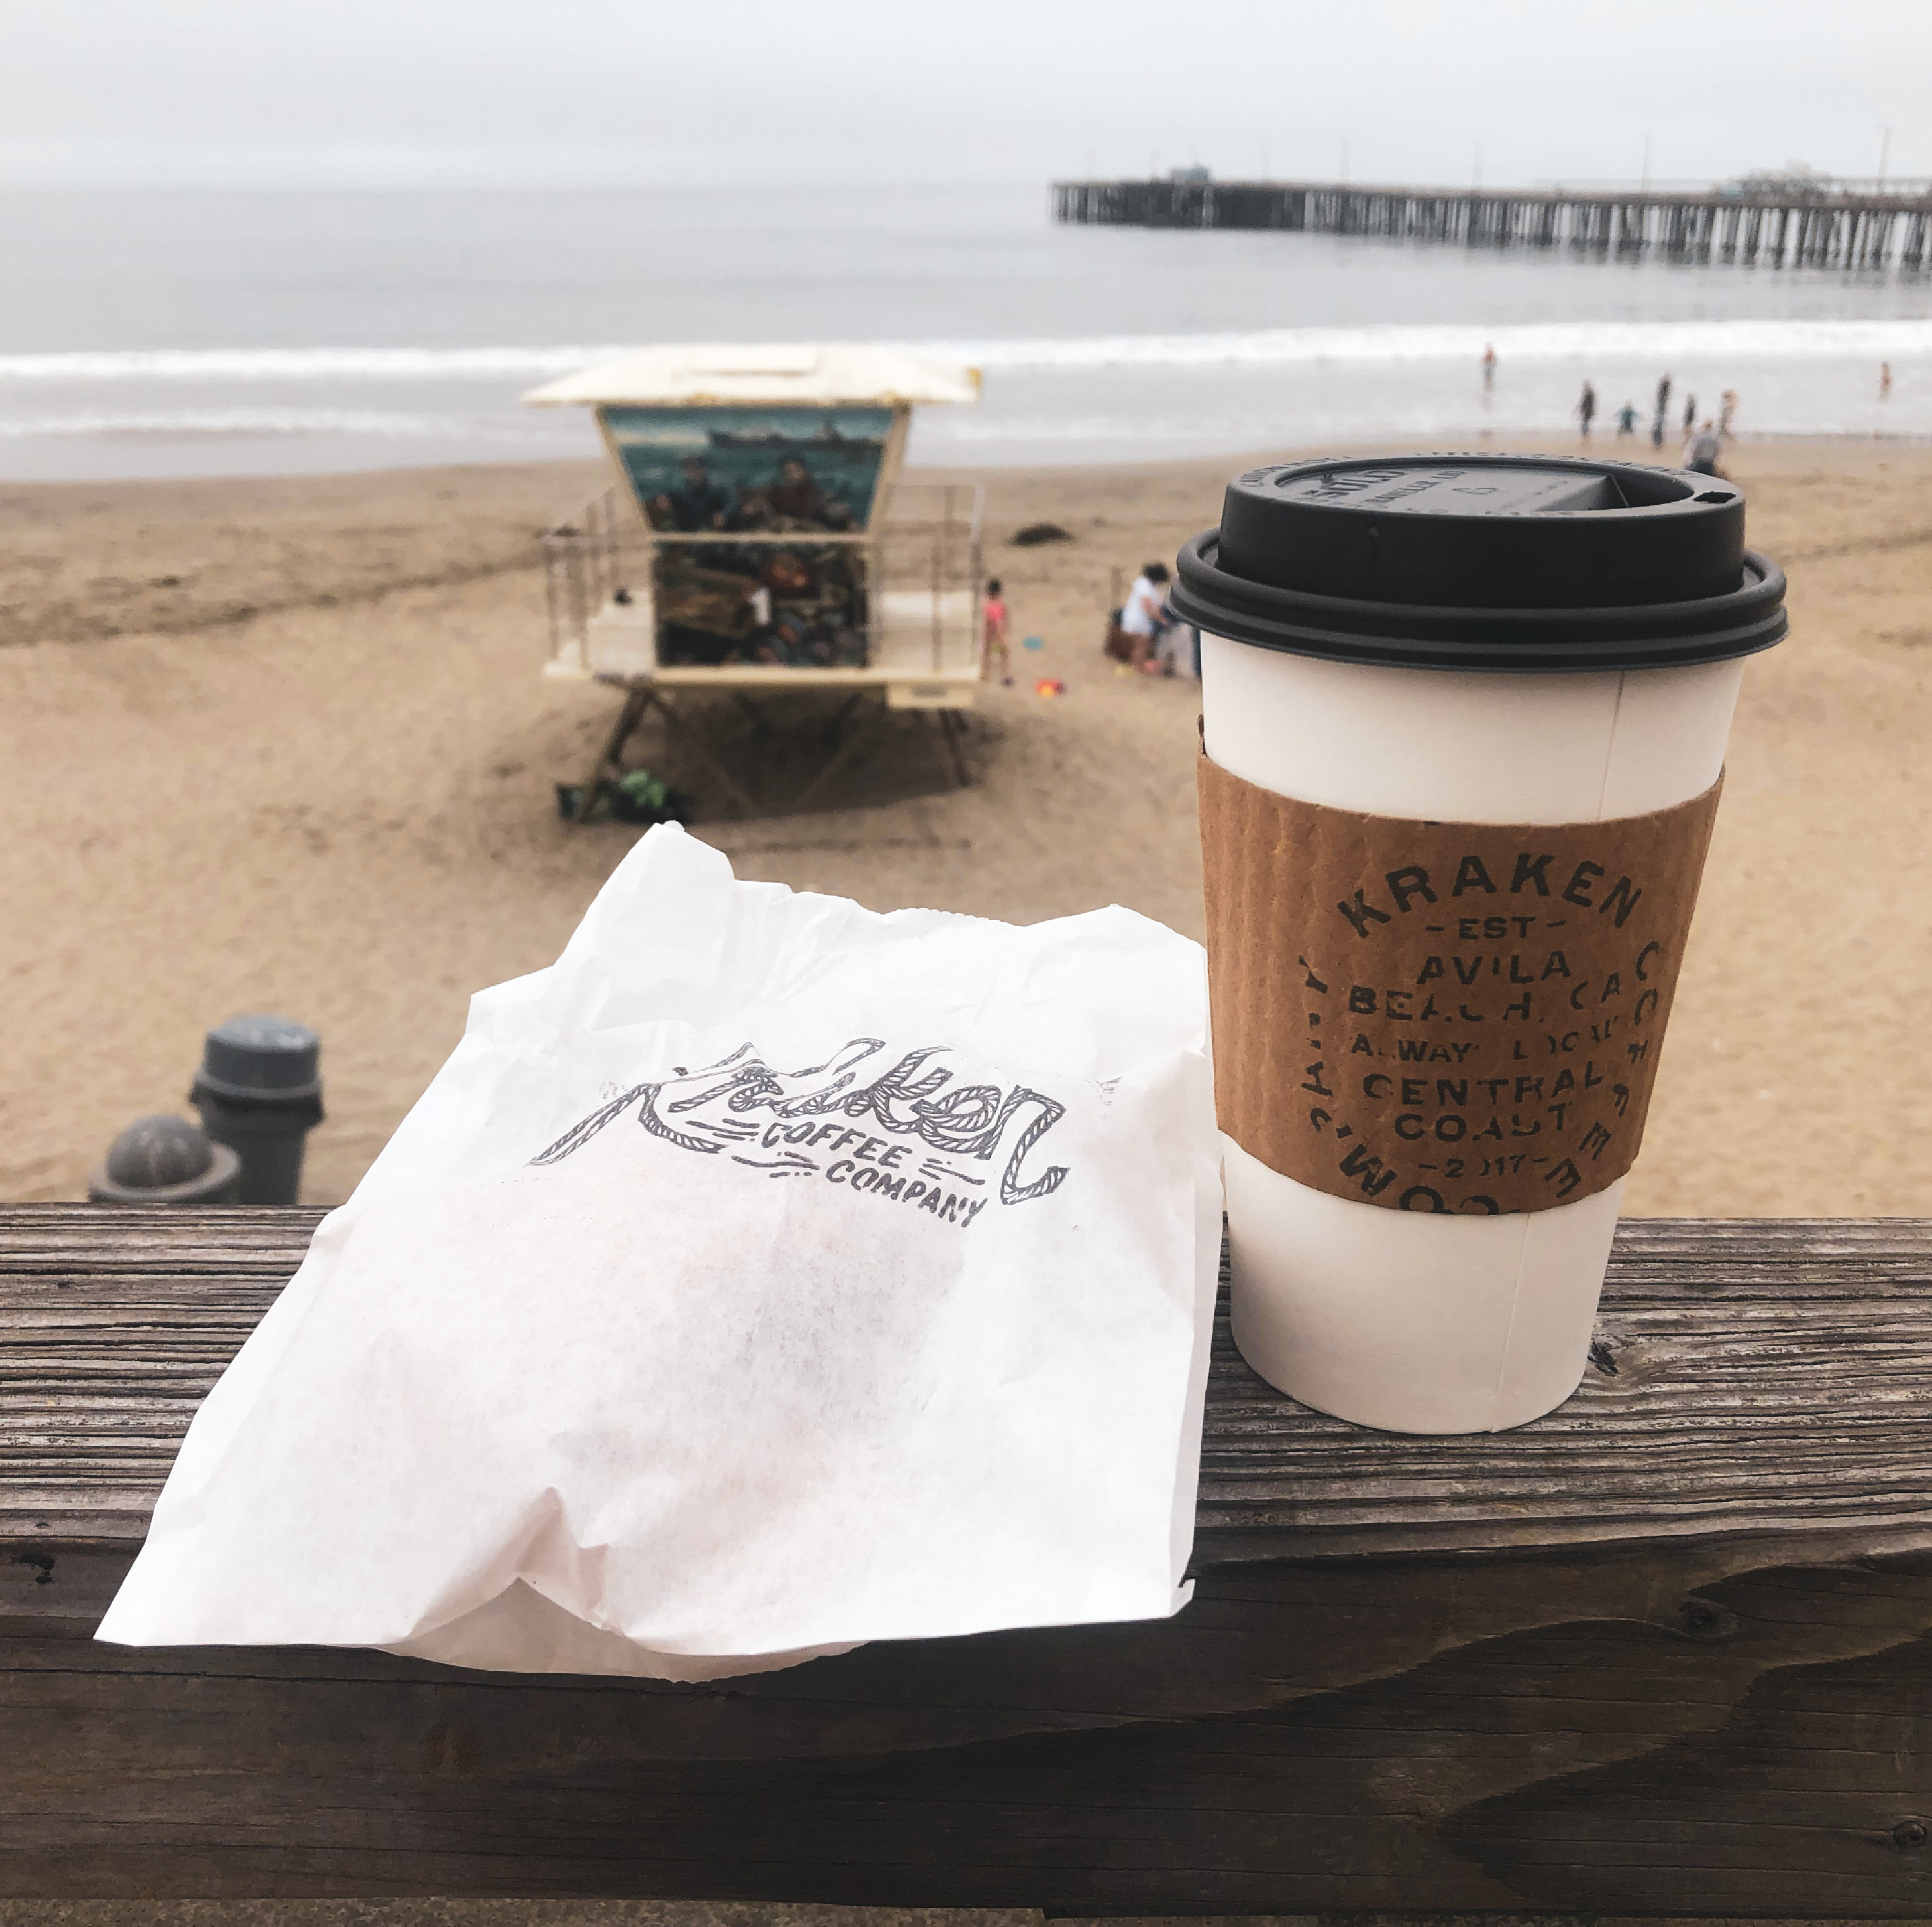 Coffee and baked goods overlooking Avila Beach, CA